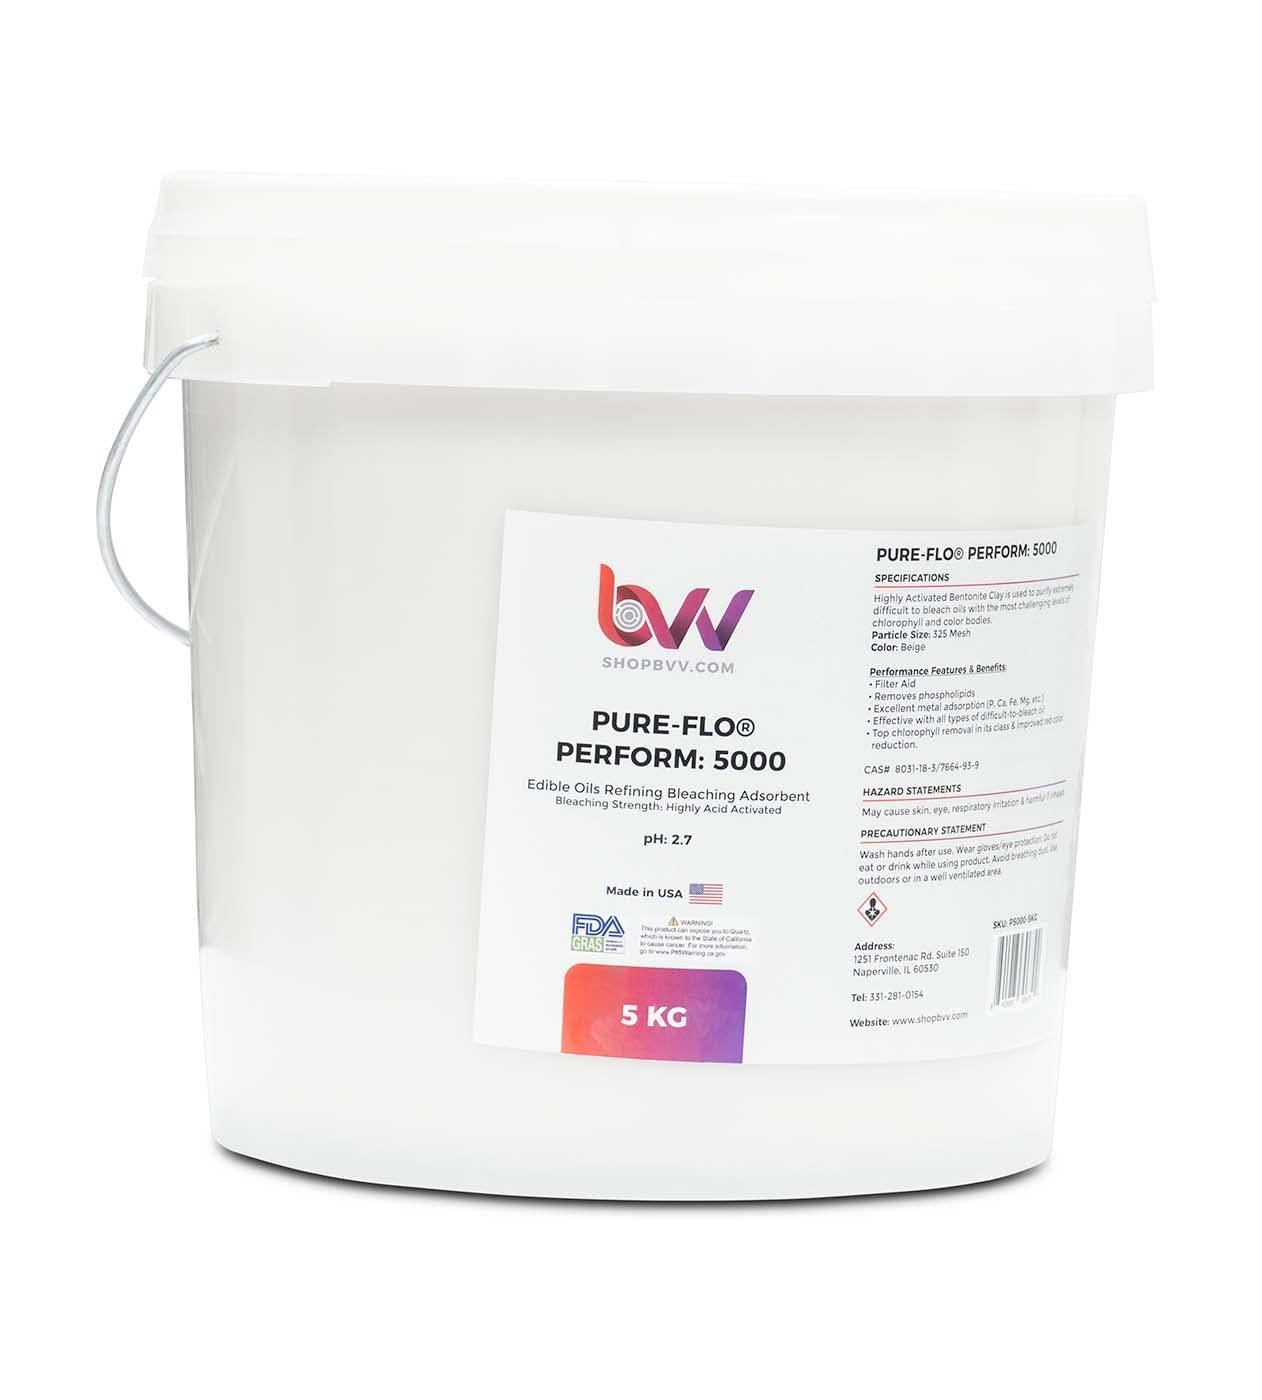 BVV Pure-Flo® Perform 5000 Highly Acid Activated Bleaching & Decolorizing Bentonite for Edible Oils *FDA-GRAS Size 10KG